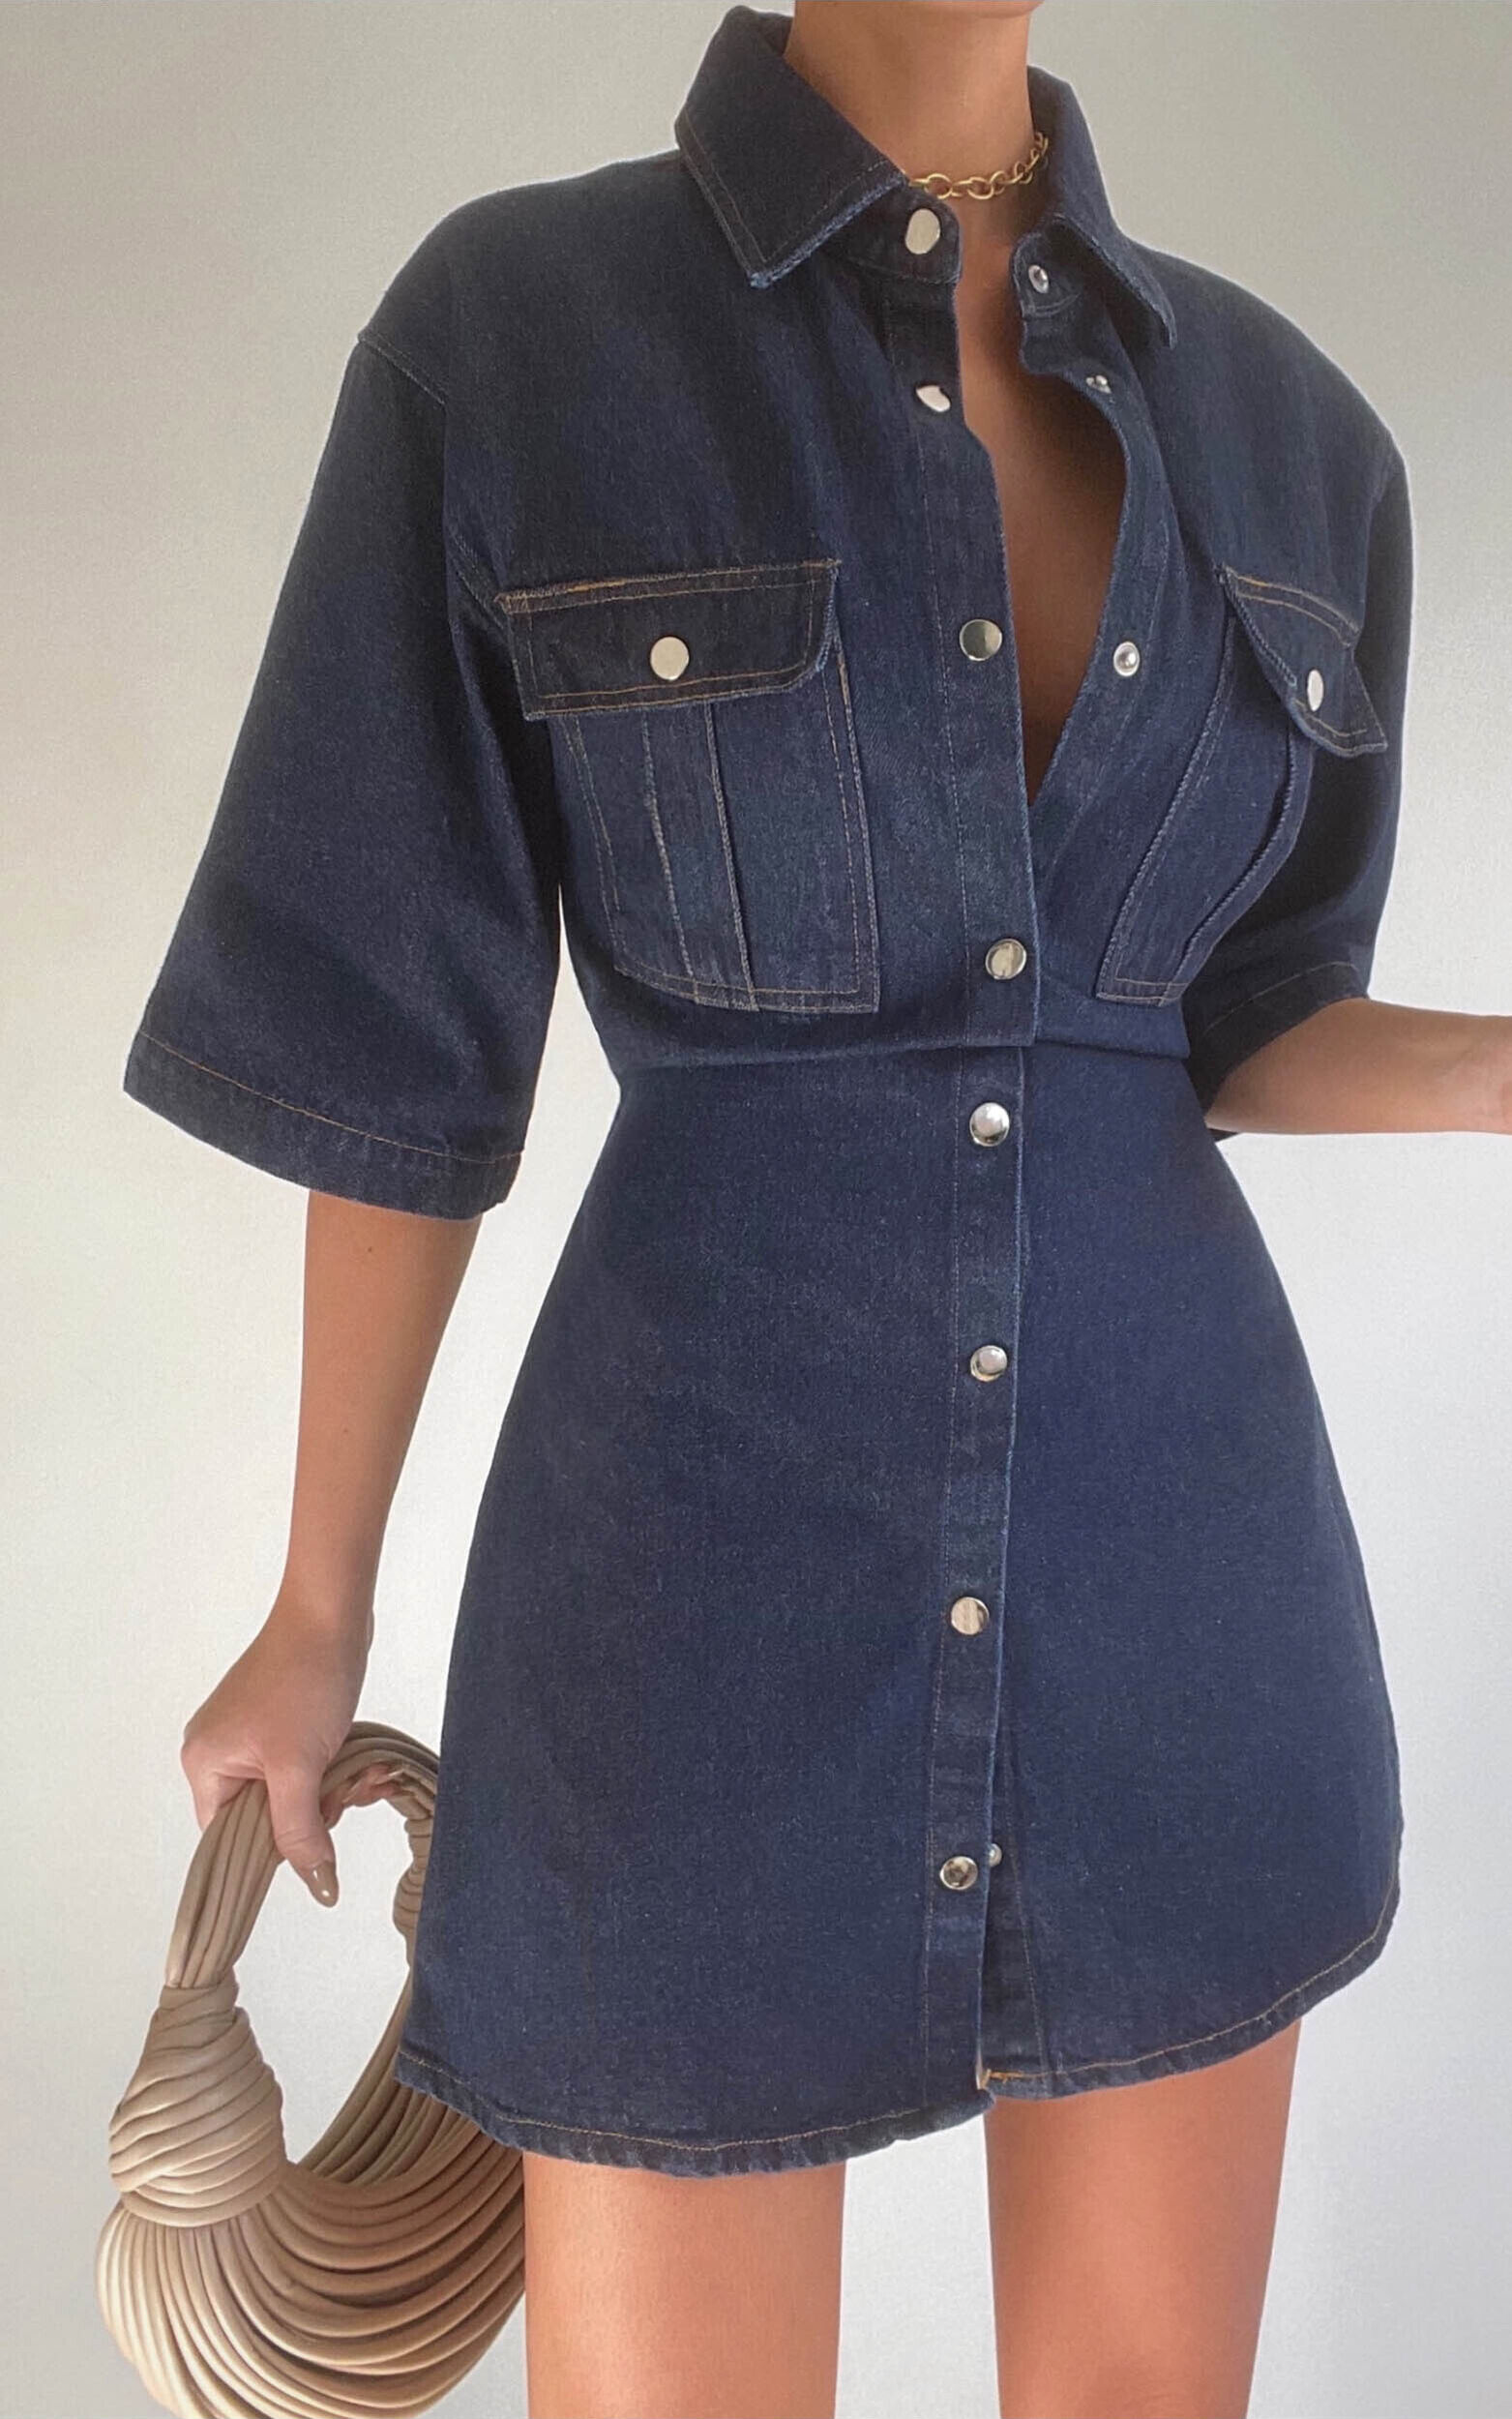 Leilani Mini Dress - Denim Short Sleeve Button Up Dress in Indigo Denim ...